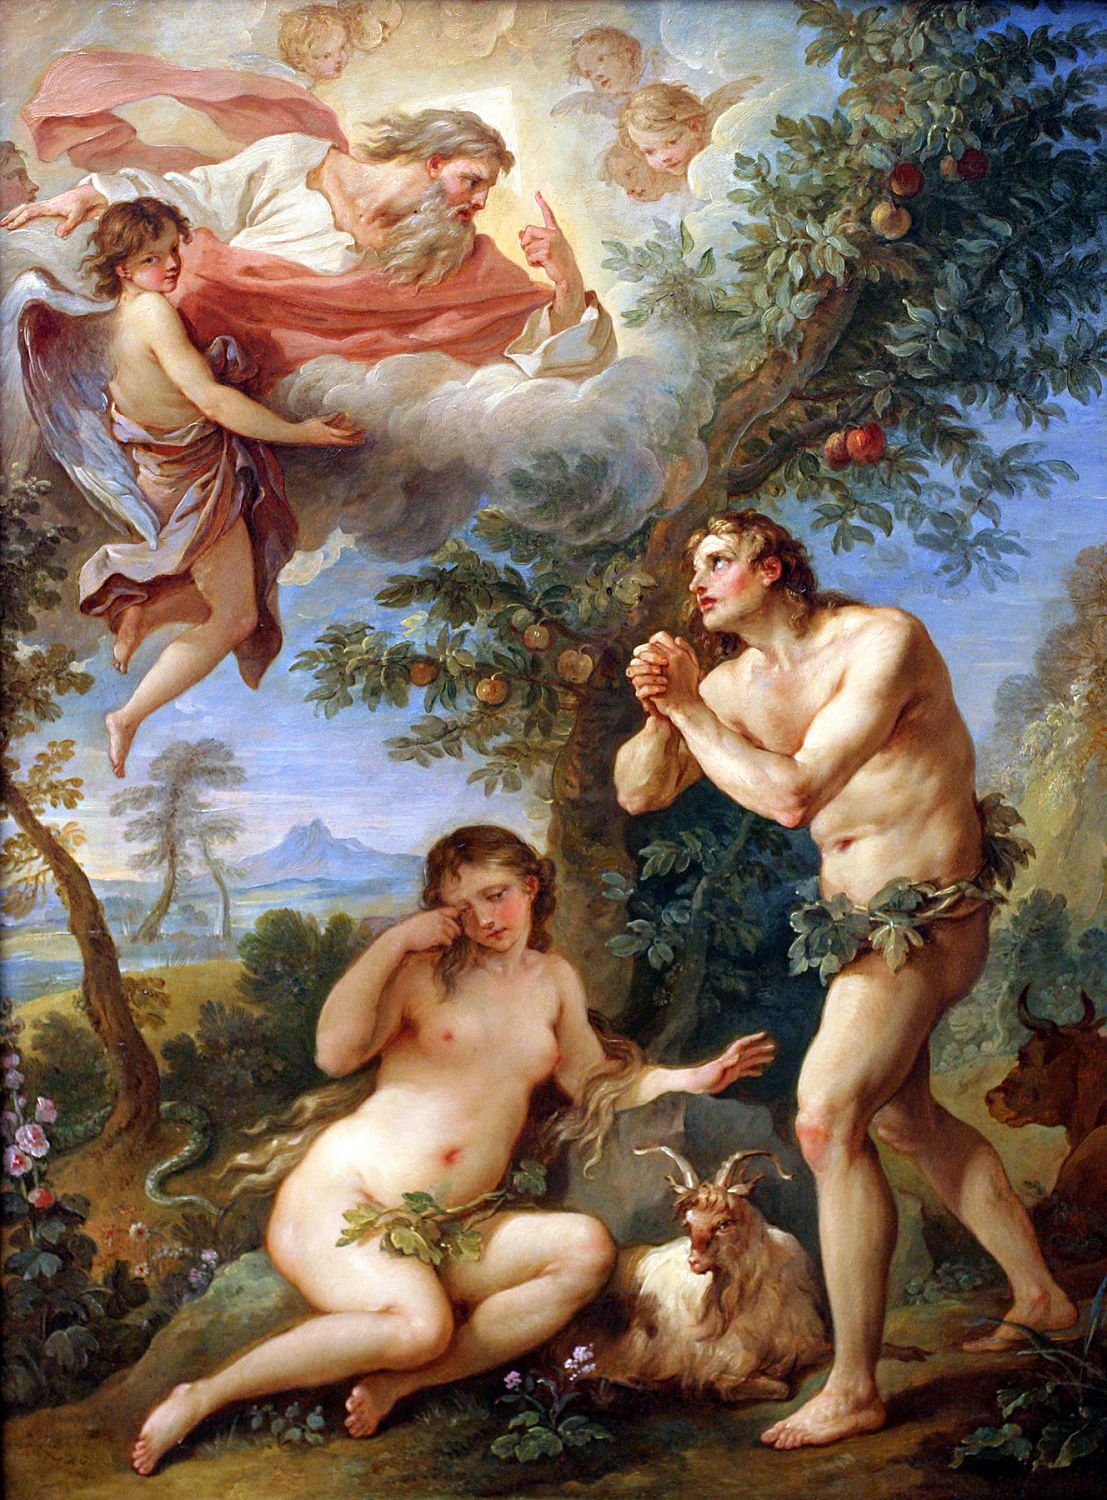 Natoire painting, The Expulsion from Paradise 1740